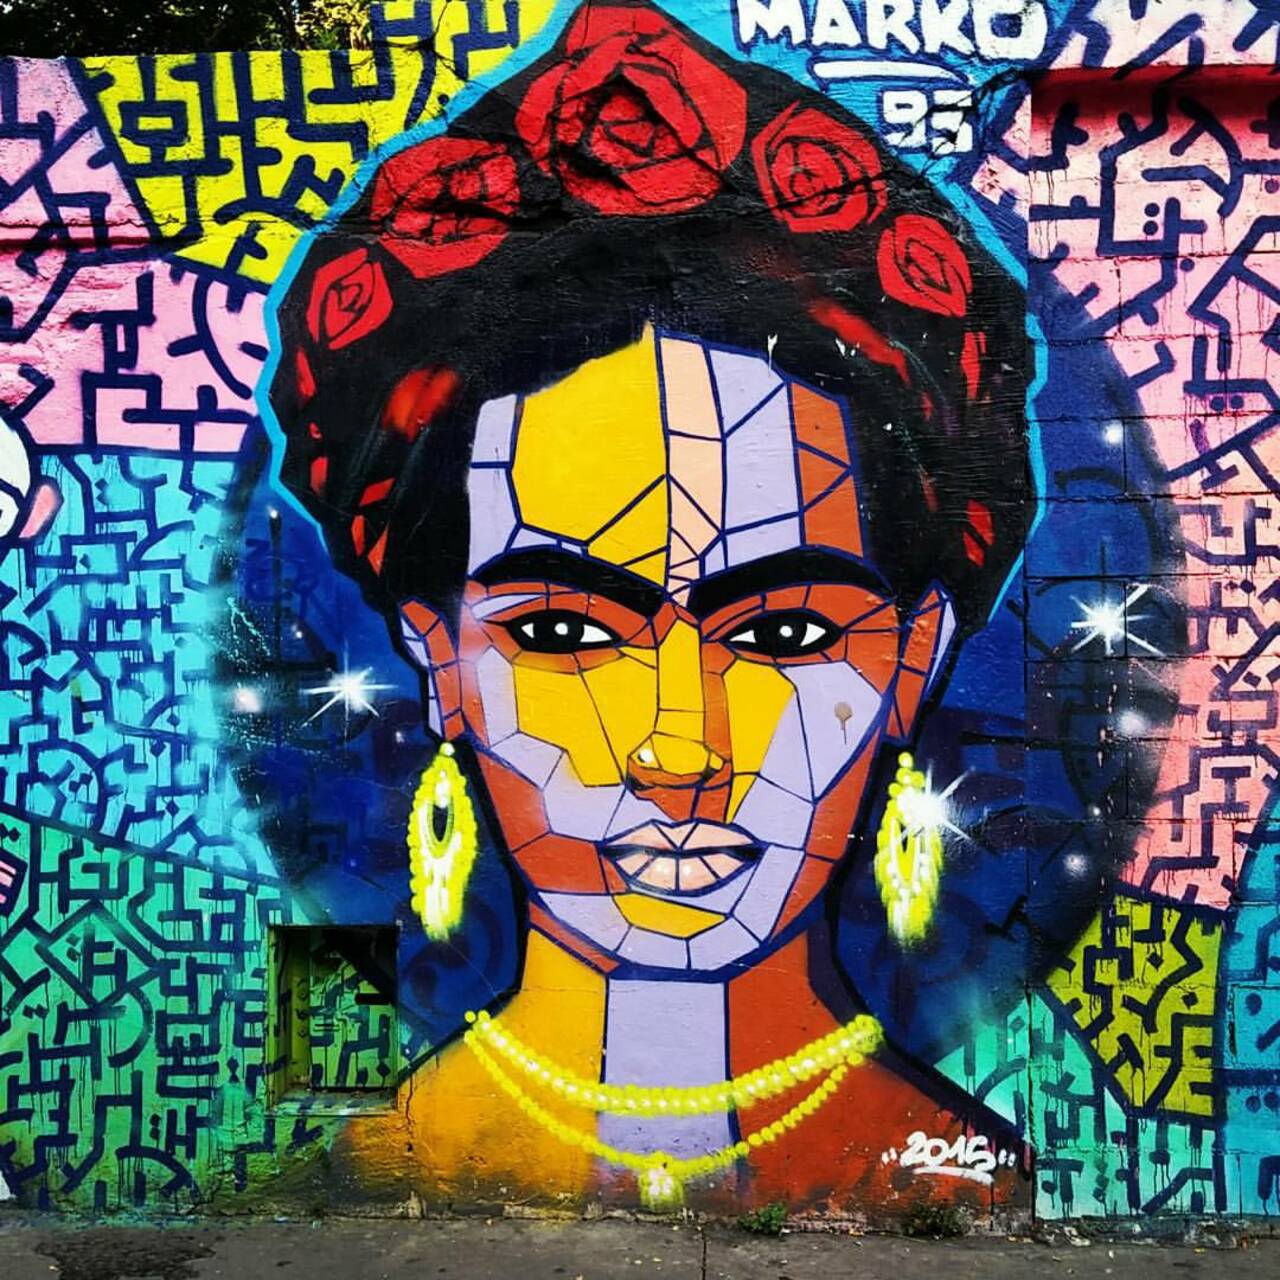 #Streetart #urbanart #graffiti #mural "Frida Kahlo", 2015 de l'artiste Marko, #Paris France
Photo Jean-Noël Chauvelot http://t.co/4O0x8uc3Dr